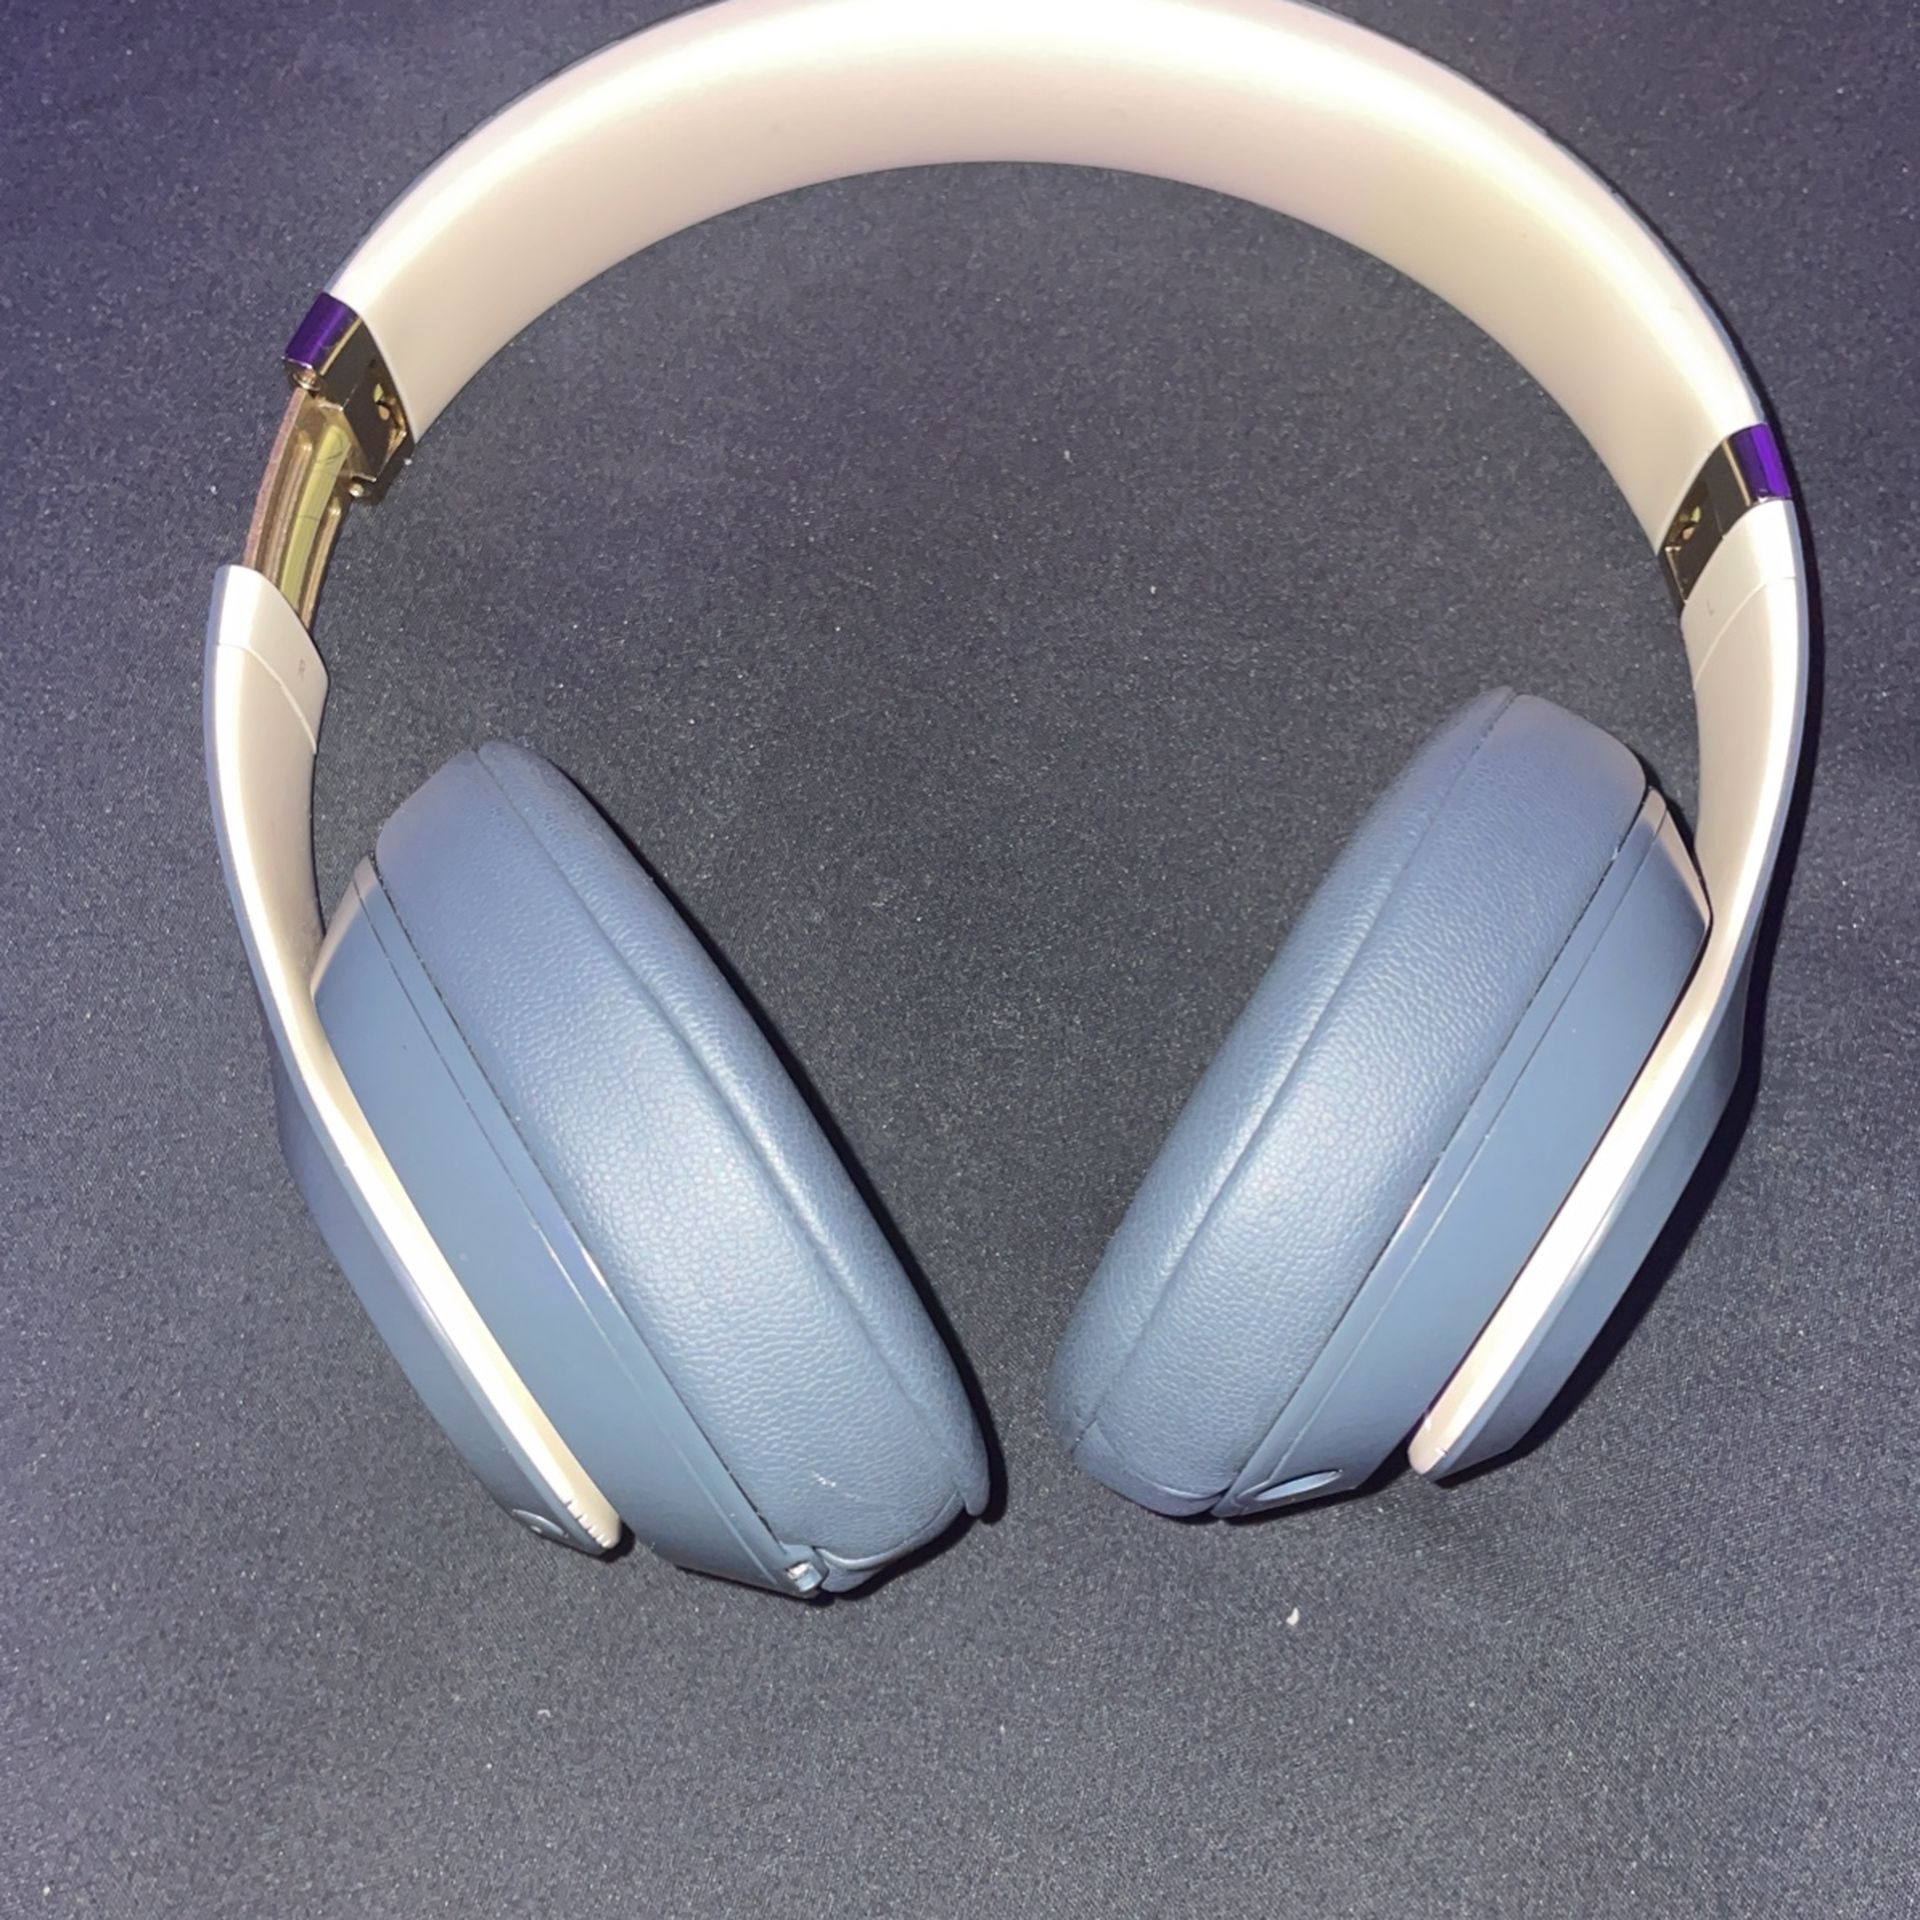 Beats Studio3 Wireless Noise Cancelling Headphones with Apple W1 Headphone Chip - Shadow Gray